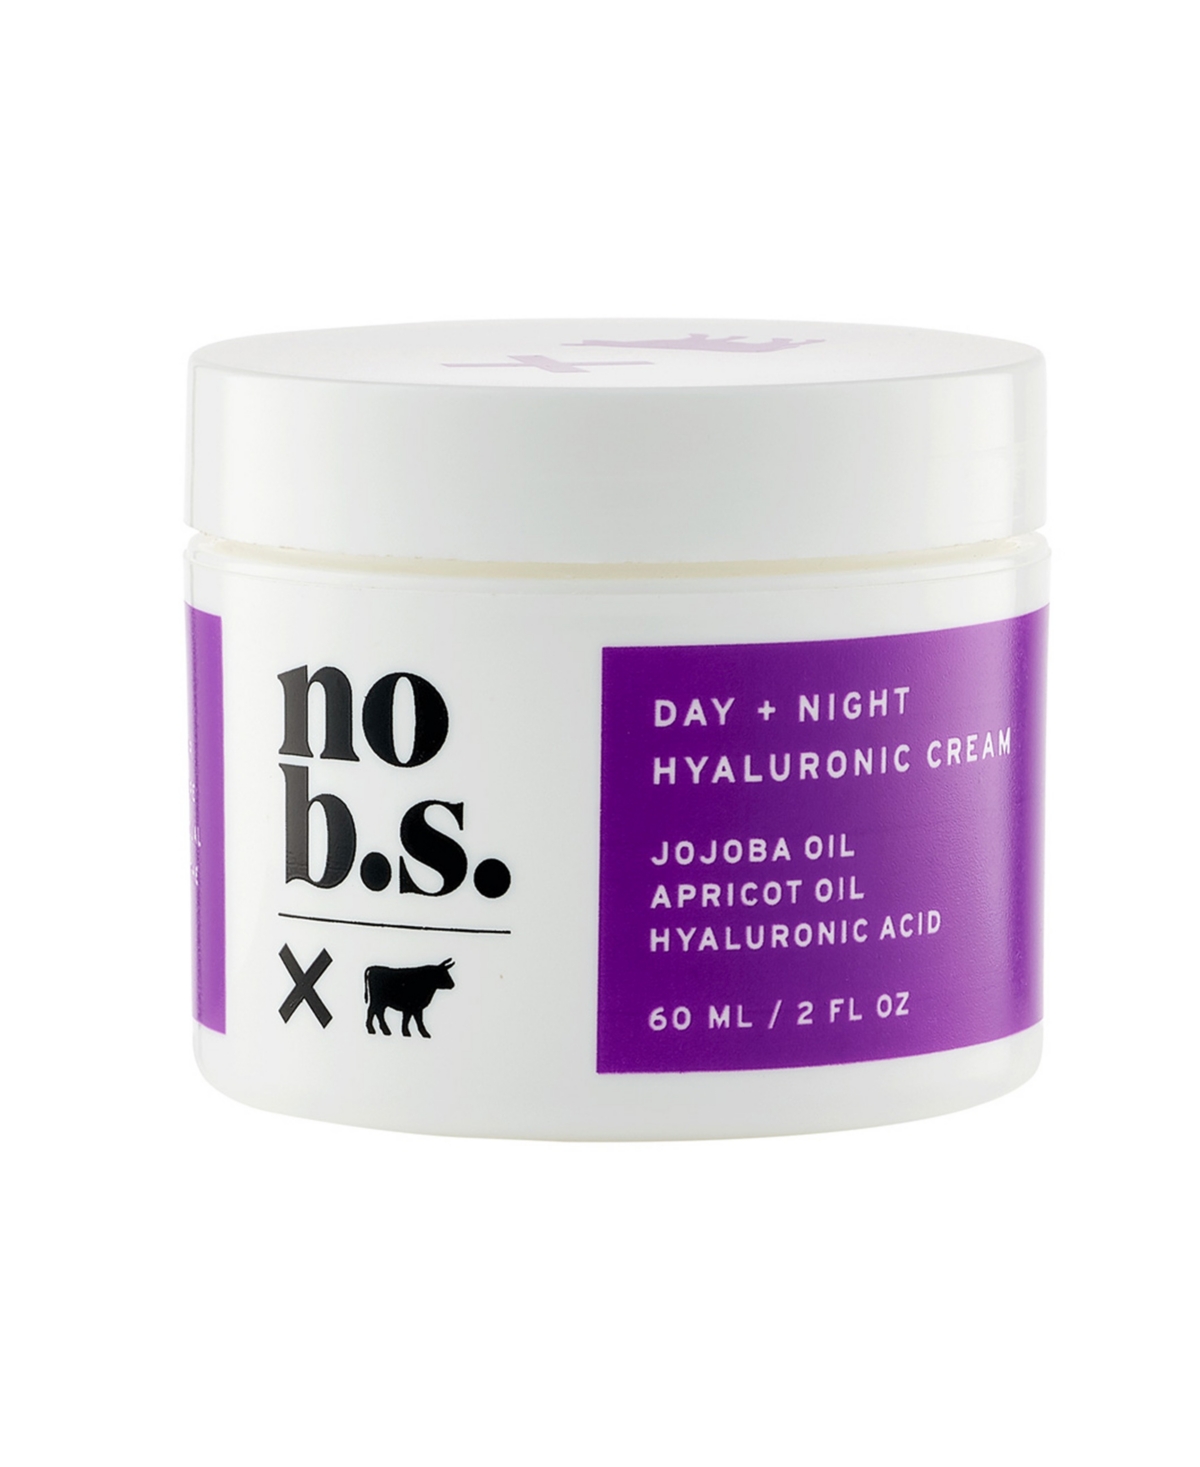 Day + Night Hyaluronic Cream